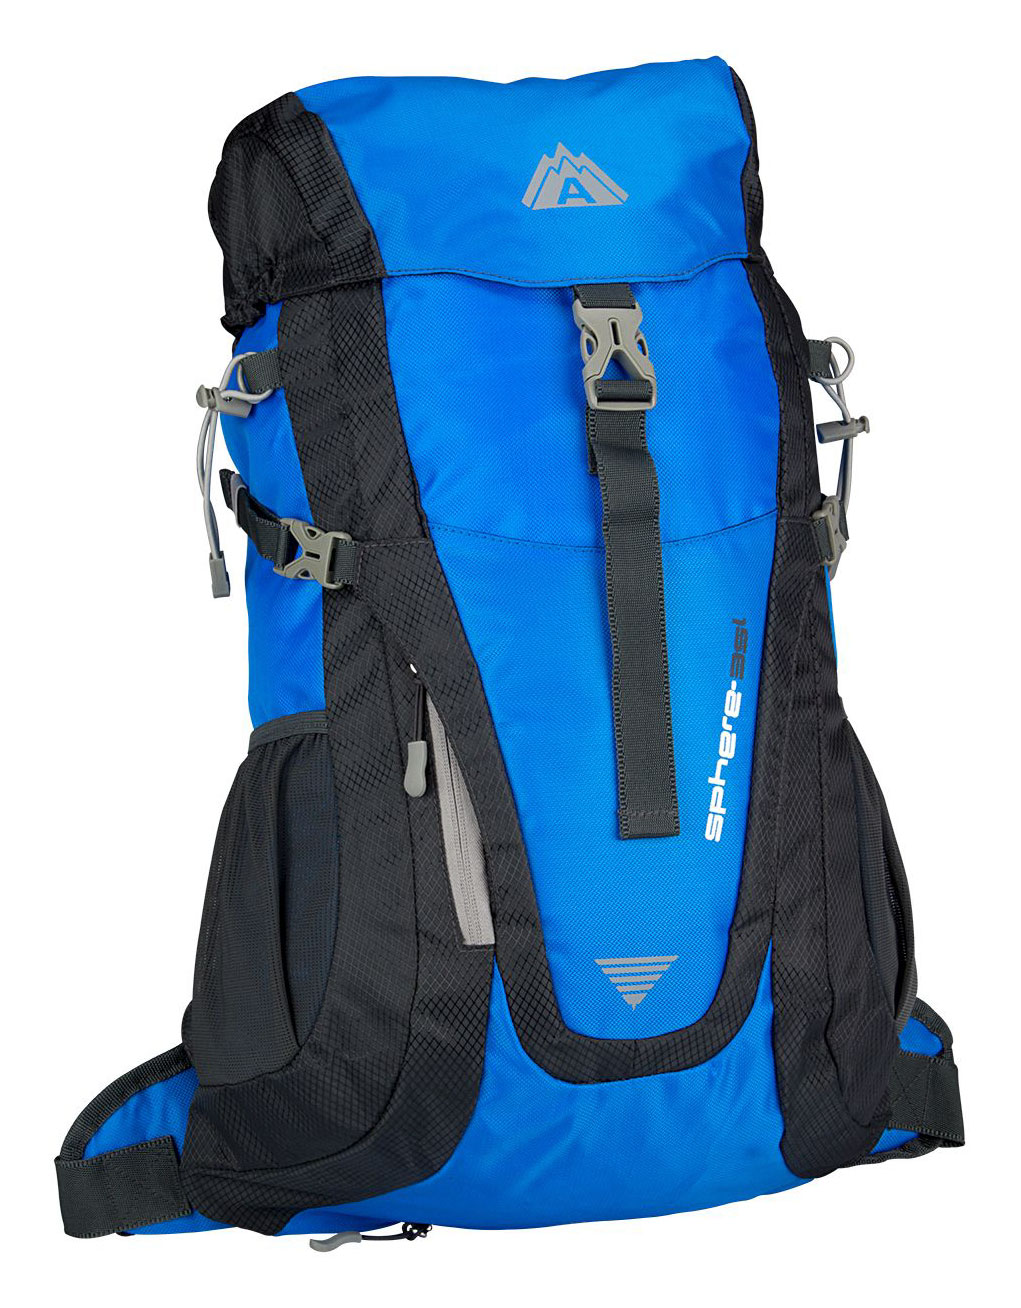 Le sac à dos Abbey Aero-Fit Backpack (35L)